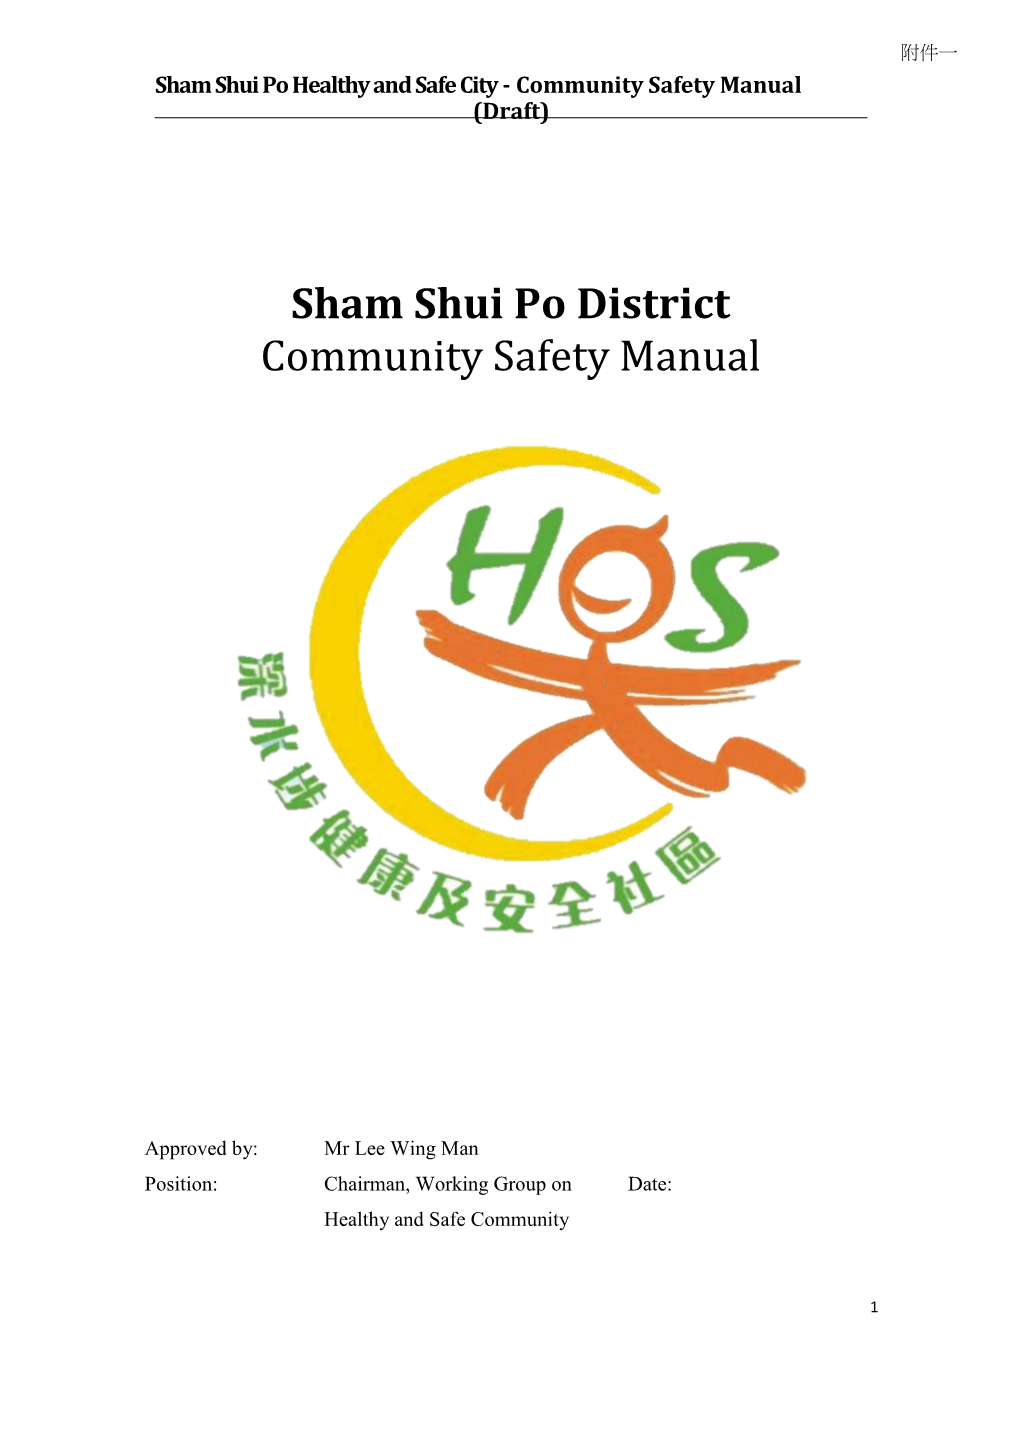 Sham Shui Po District